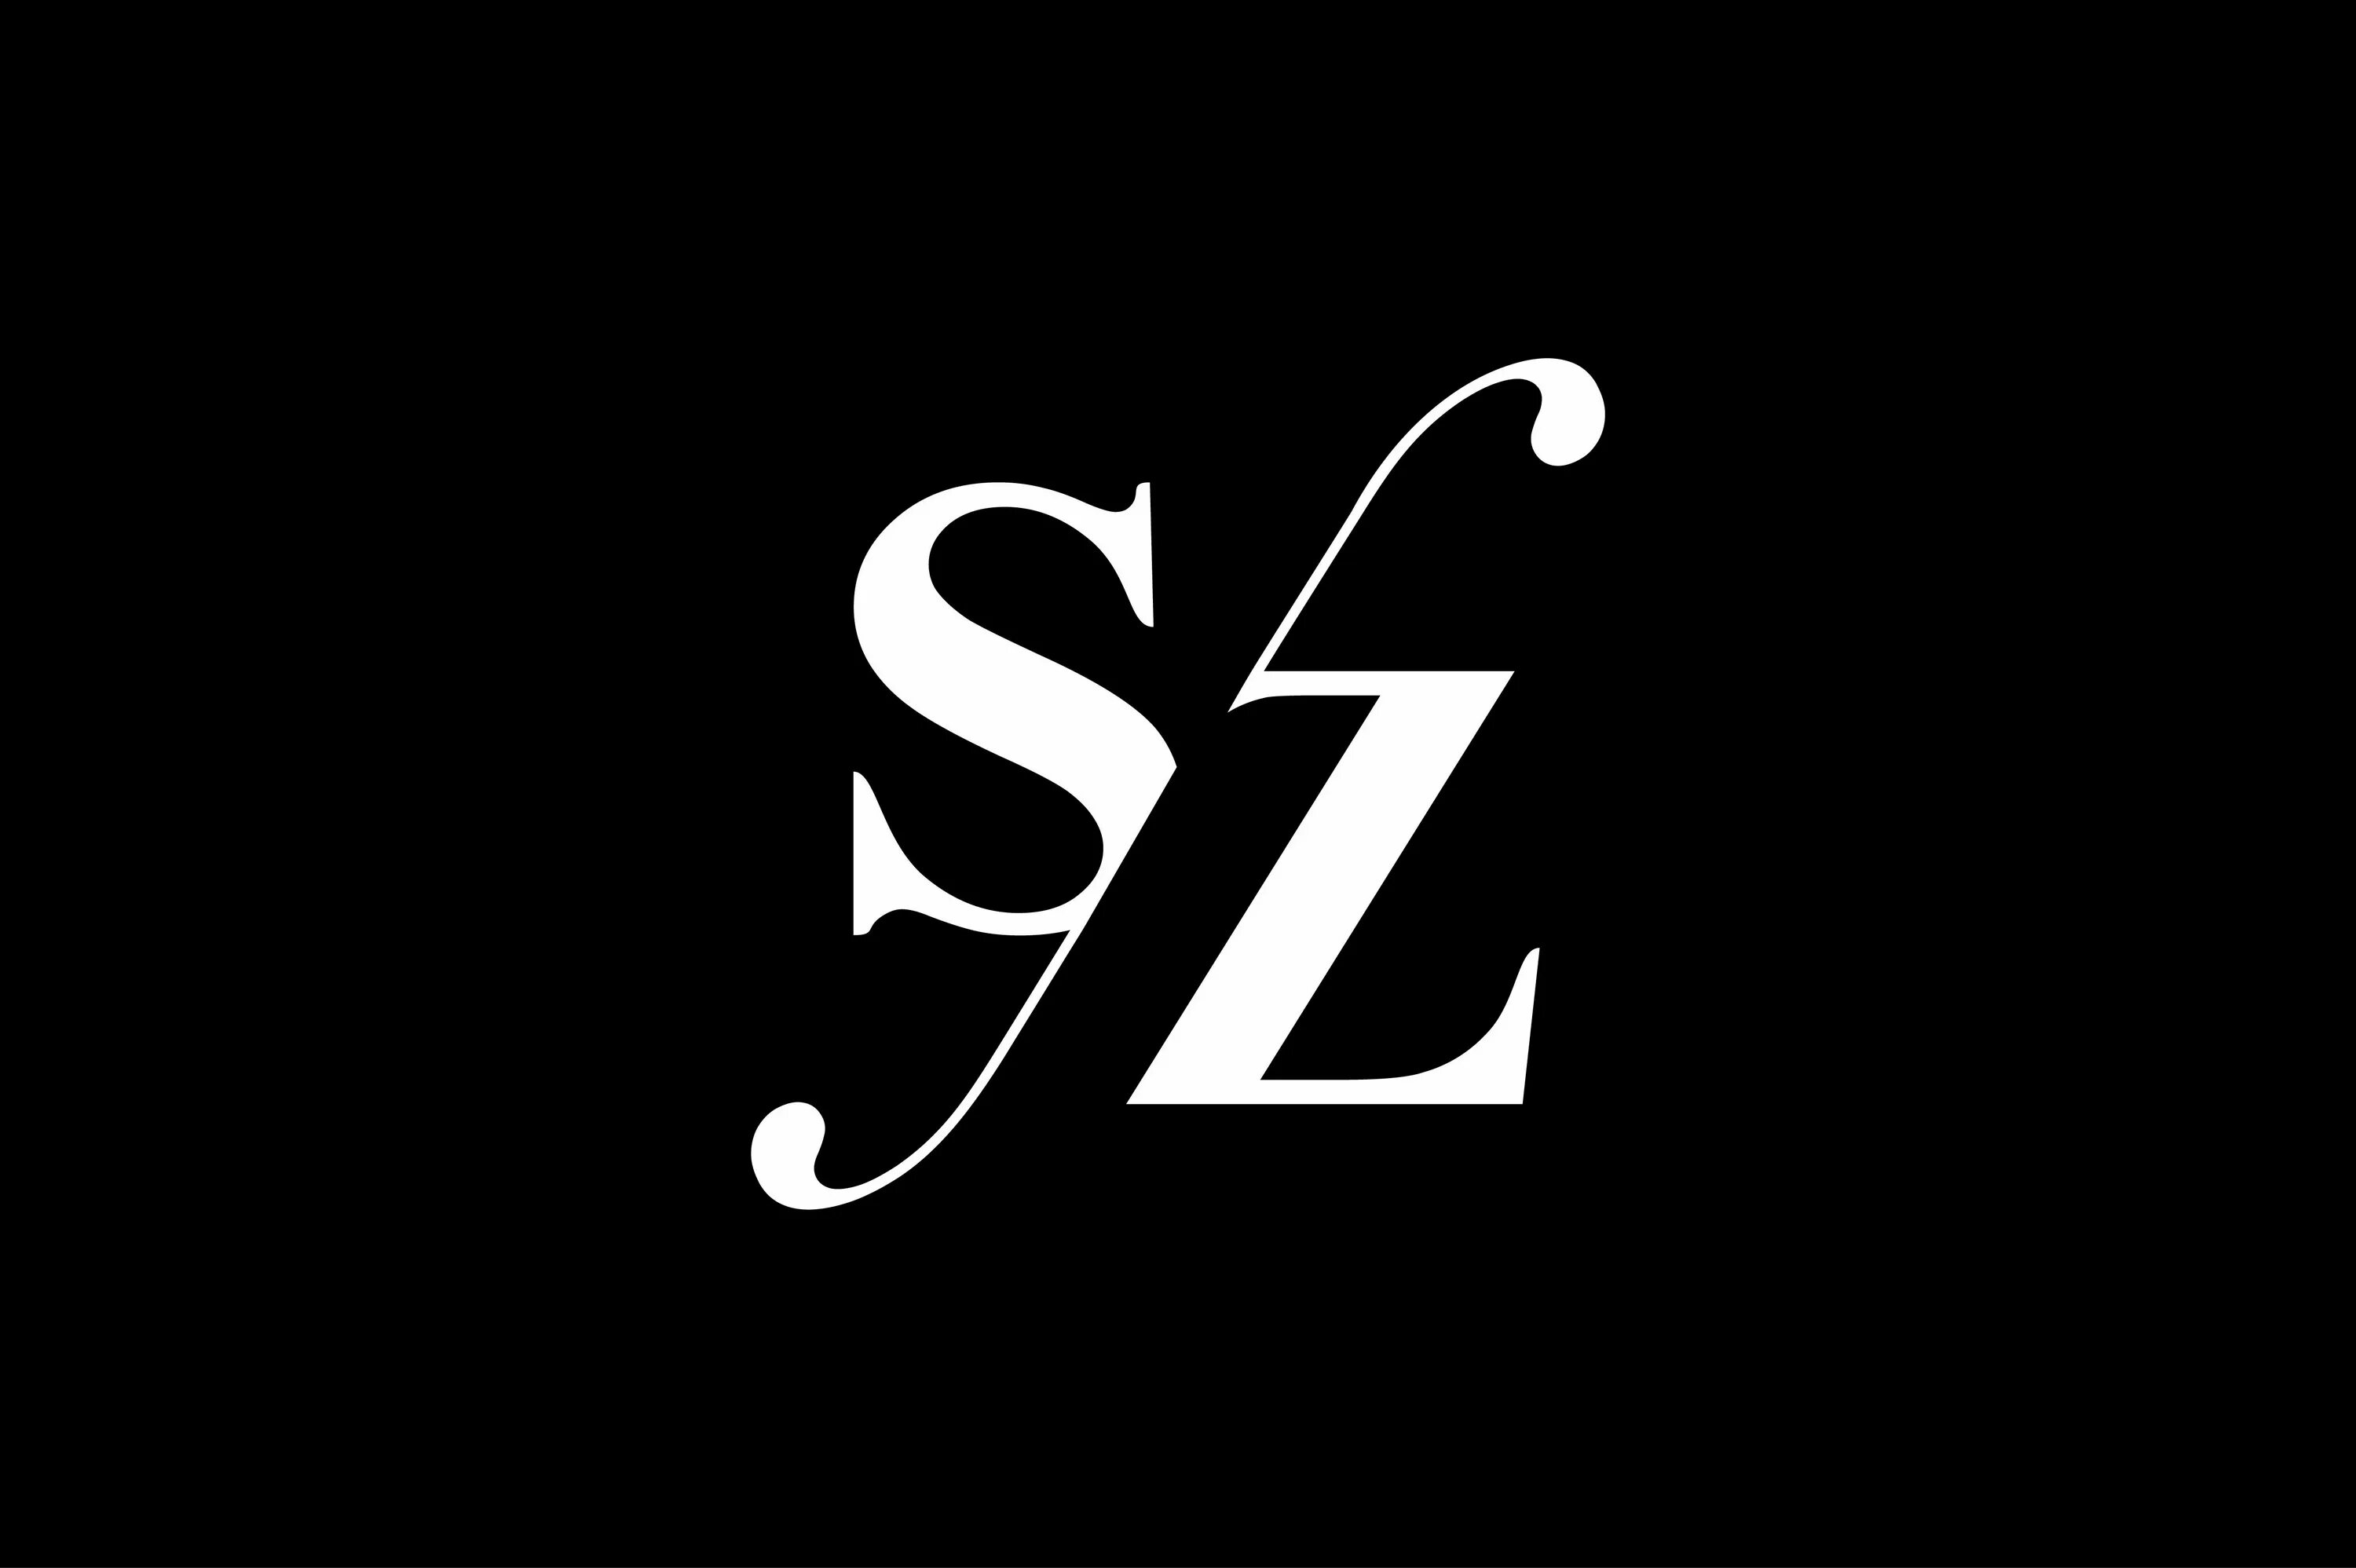 SZ лого. Ez картинка. Монограмма ZS. Эмблема с буквой z. S z pas